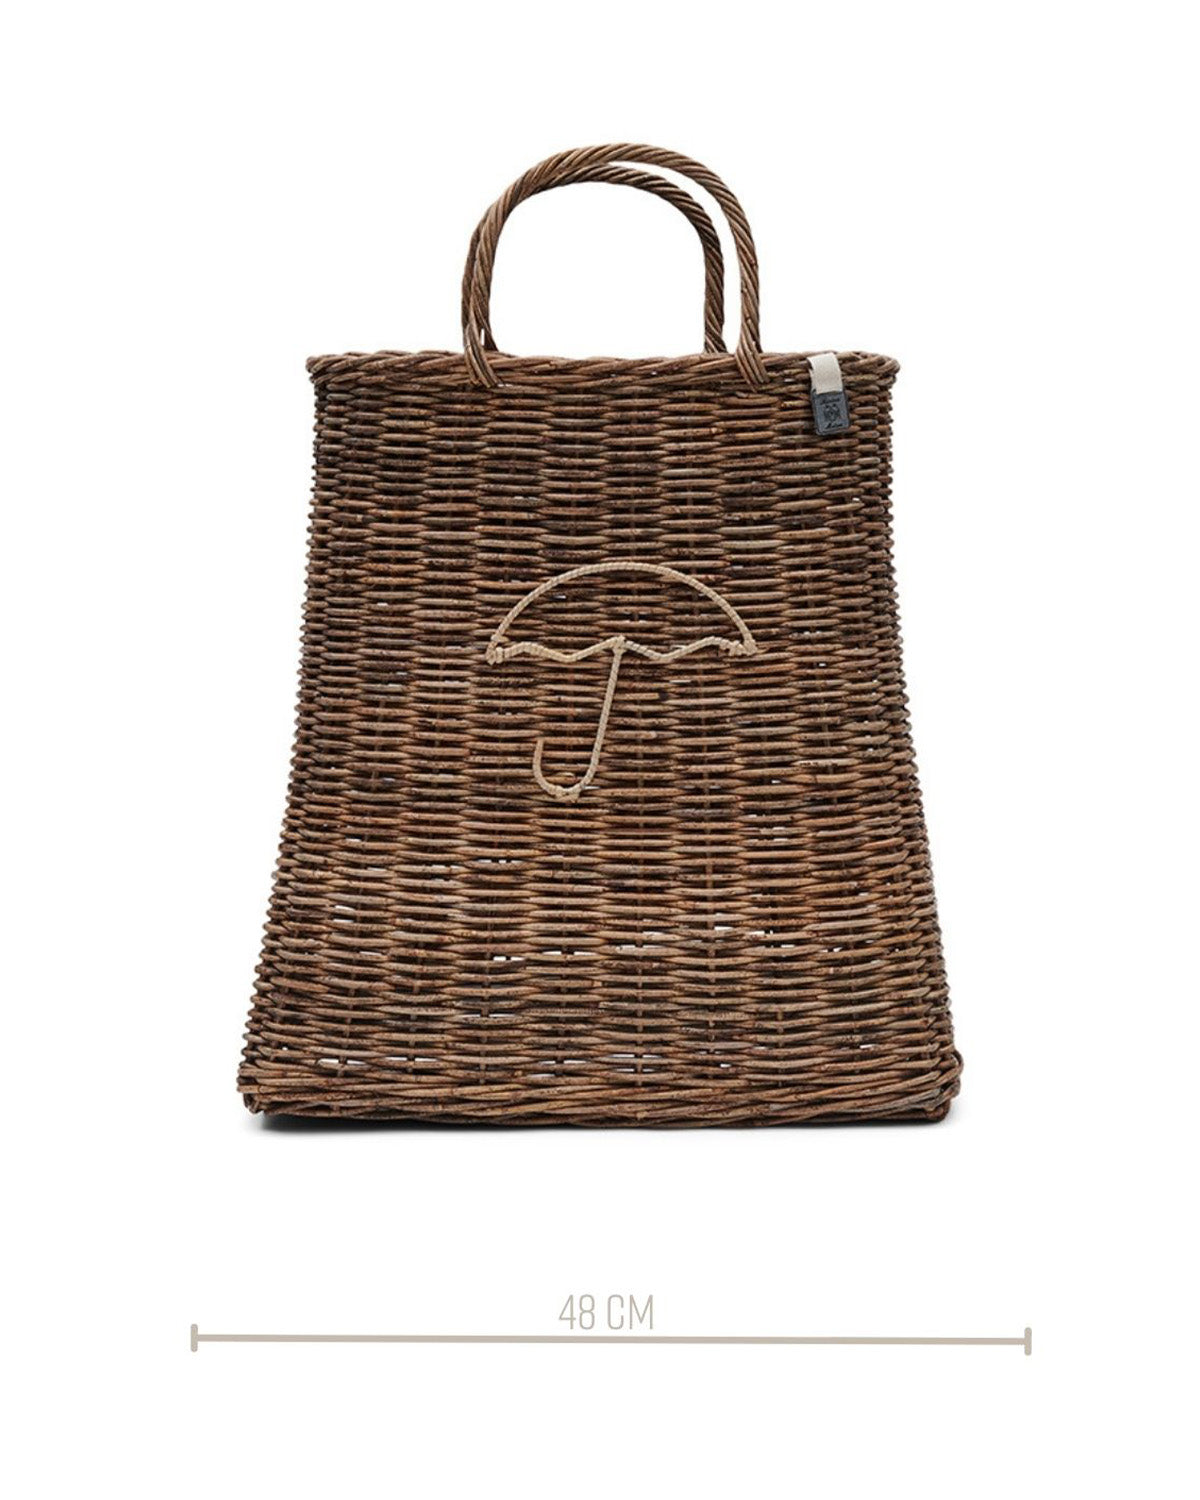 UMBRELLA BAG  handmade from braided rattan by Riviera Maison